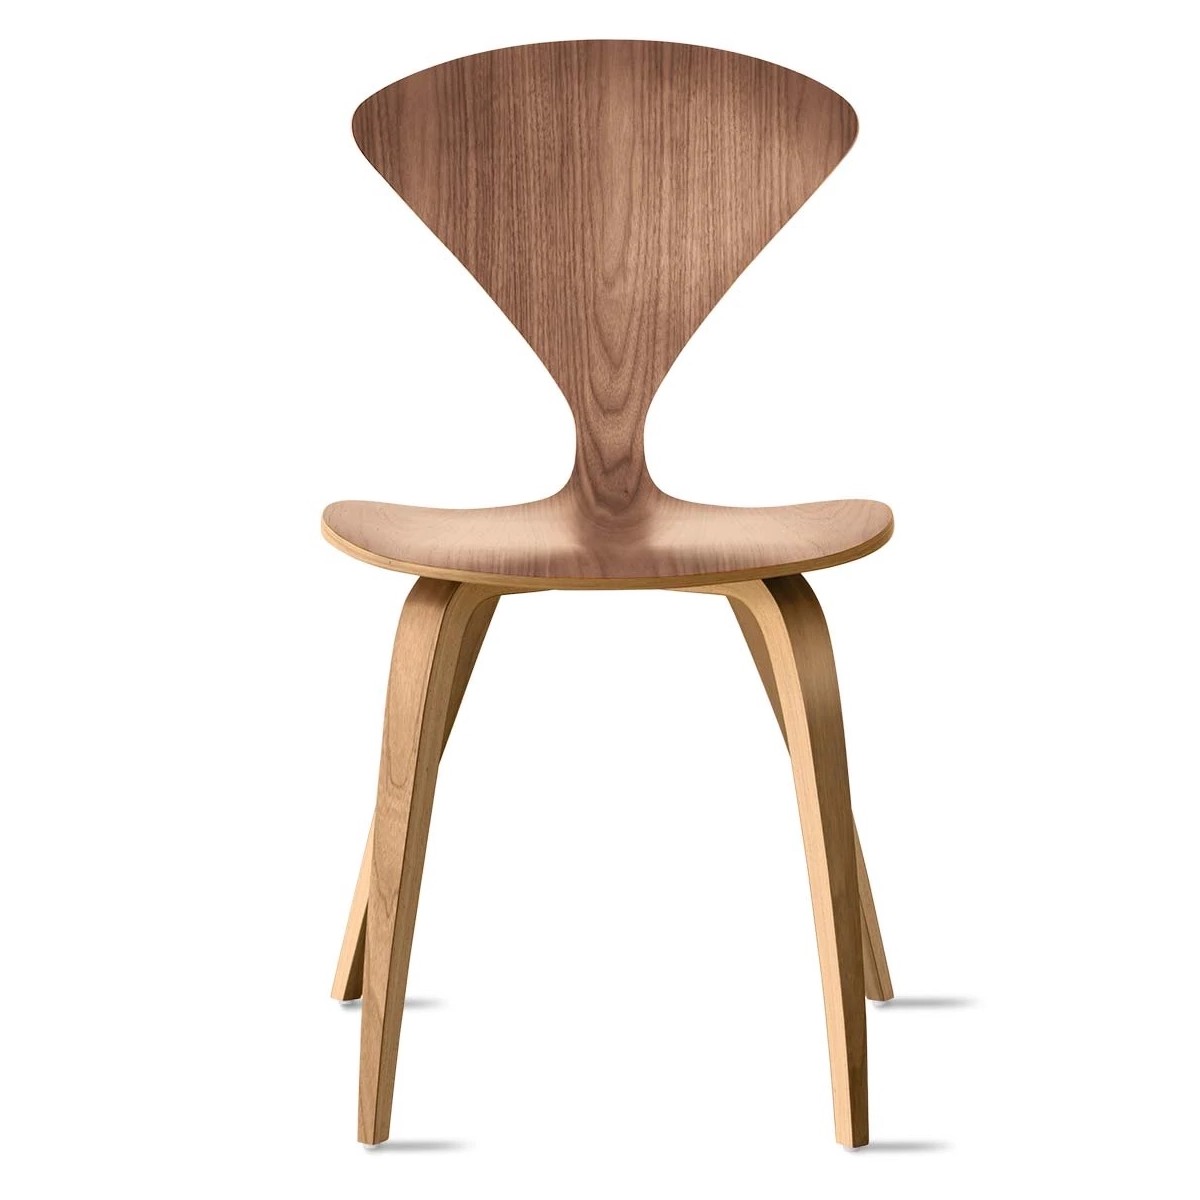 natural walnut - Cherner chair